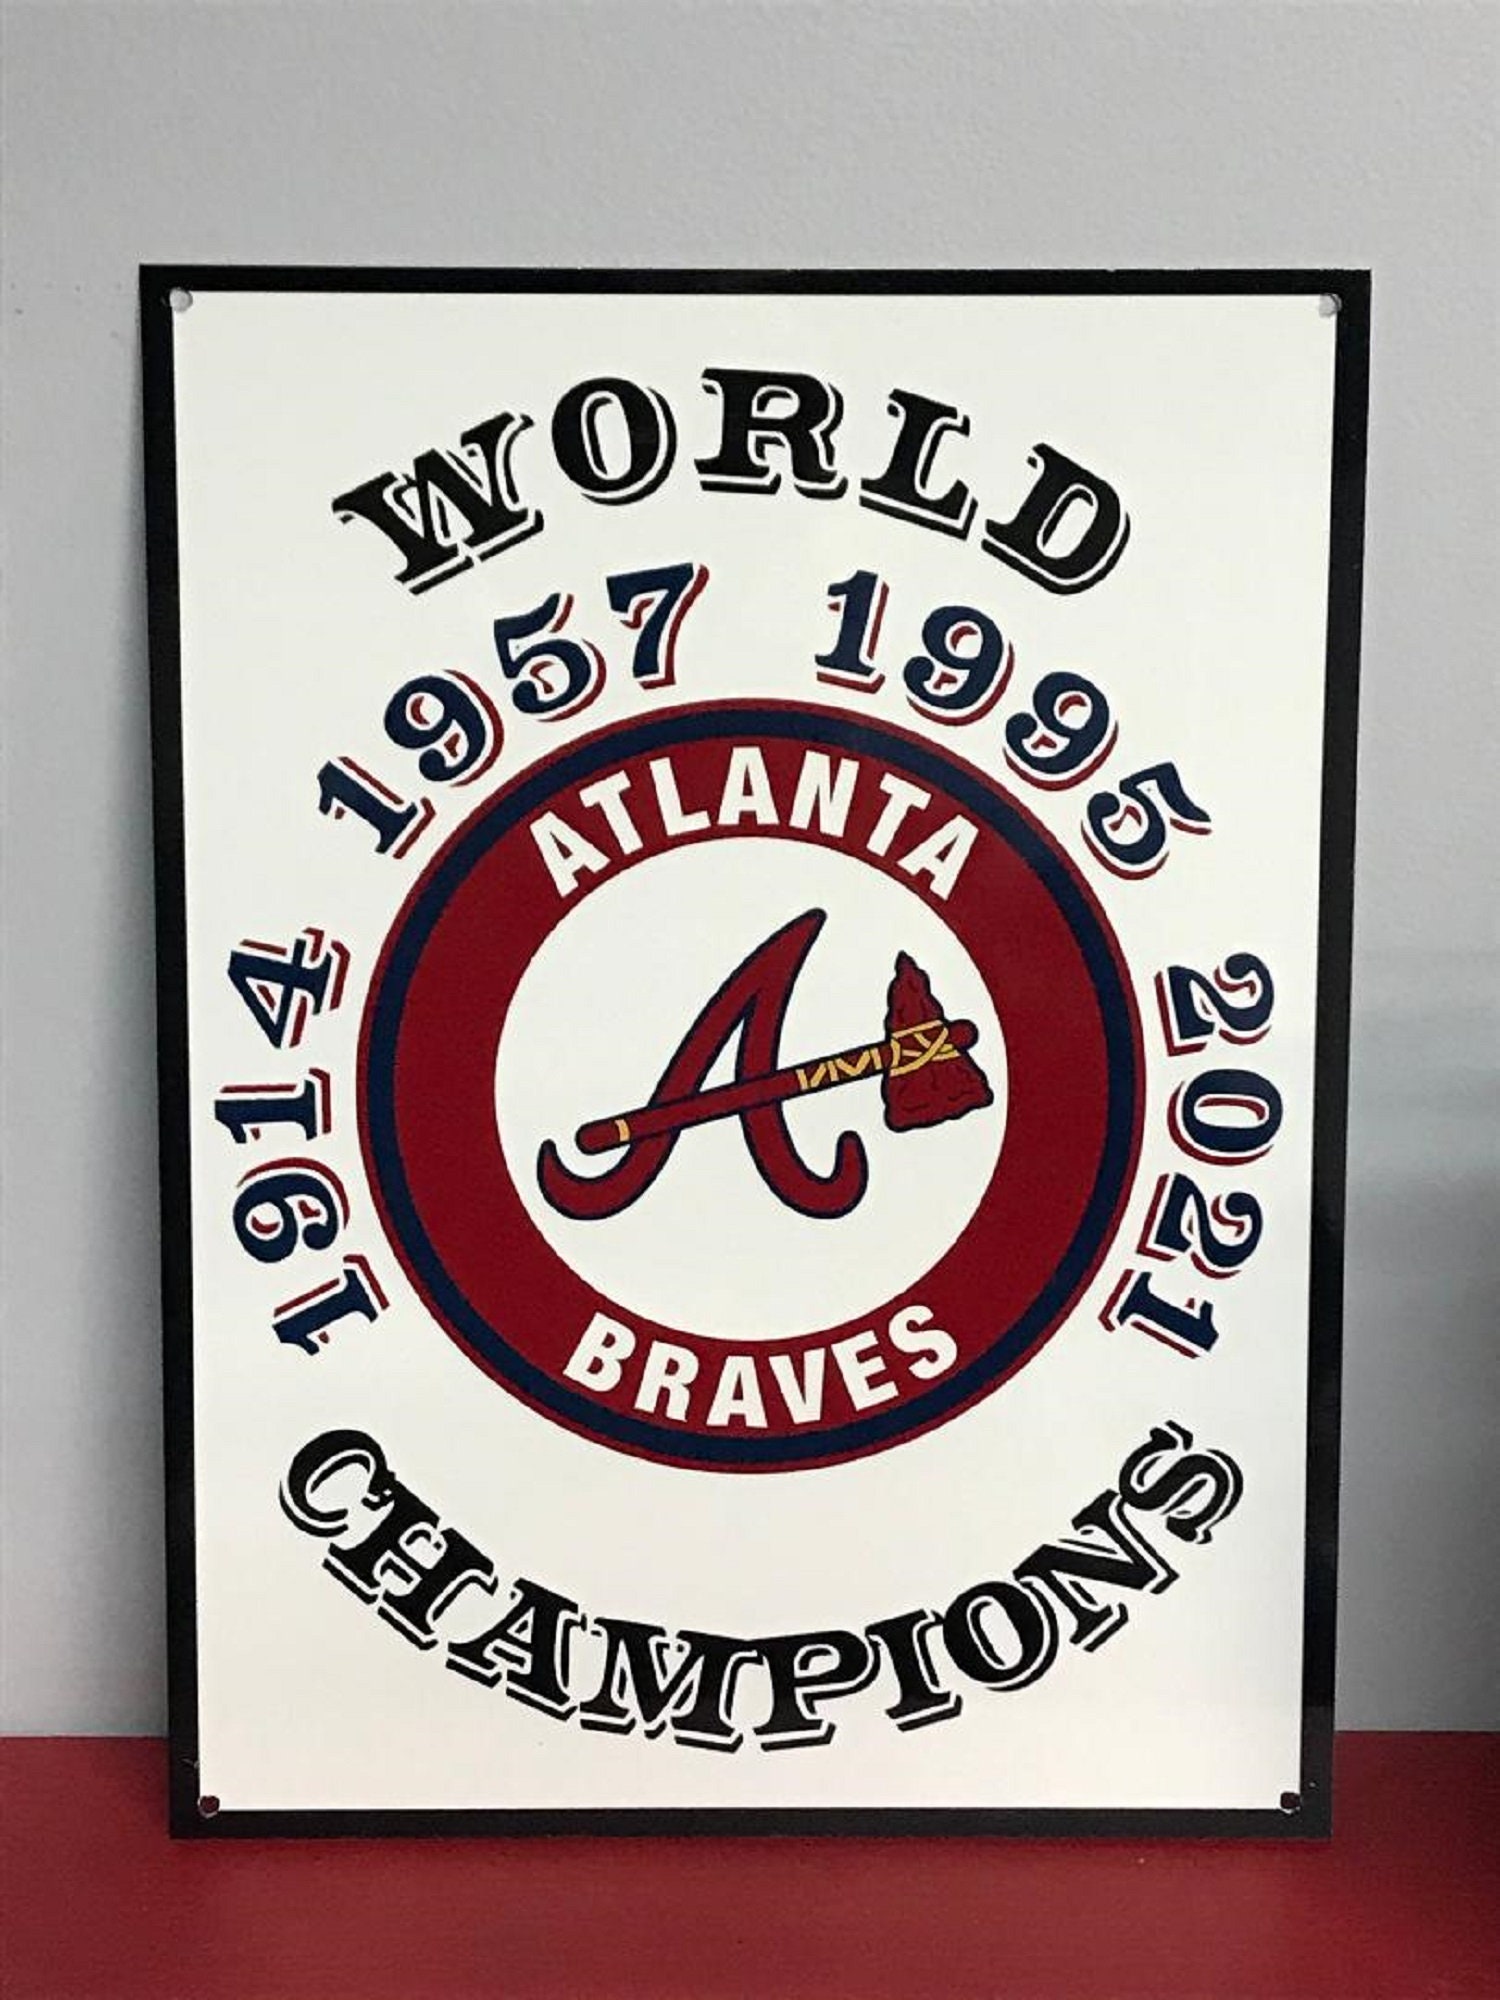 Atlanta Braves Nike 2021 World Series Champions 1914 1957 1995 and 2021  Shirt, hoodie, sweater, long sleeve and tank top